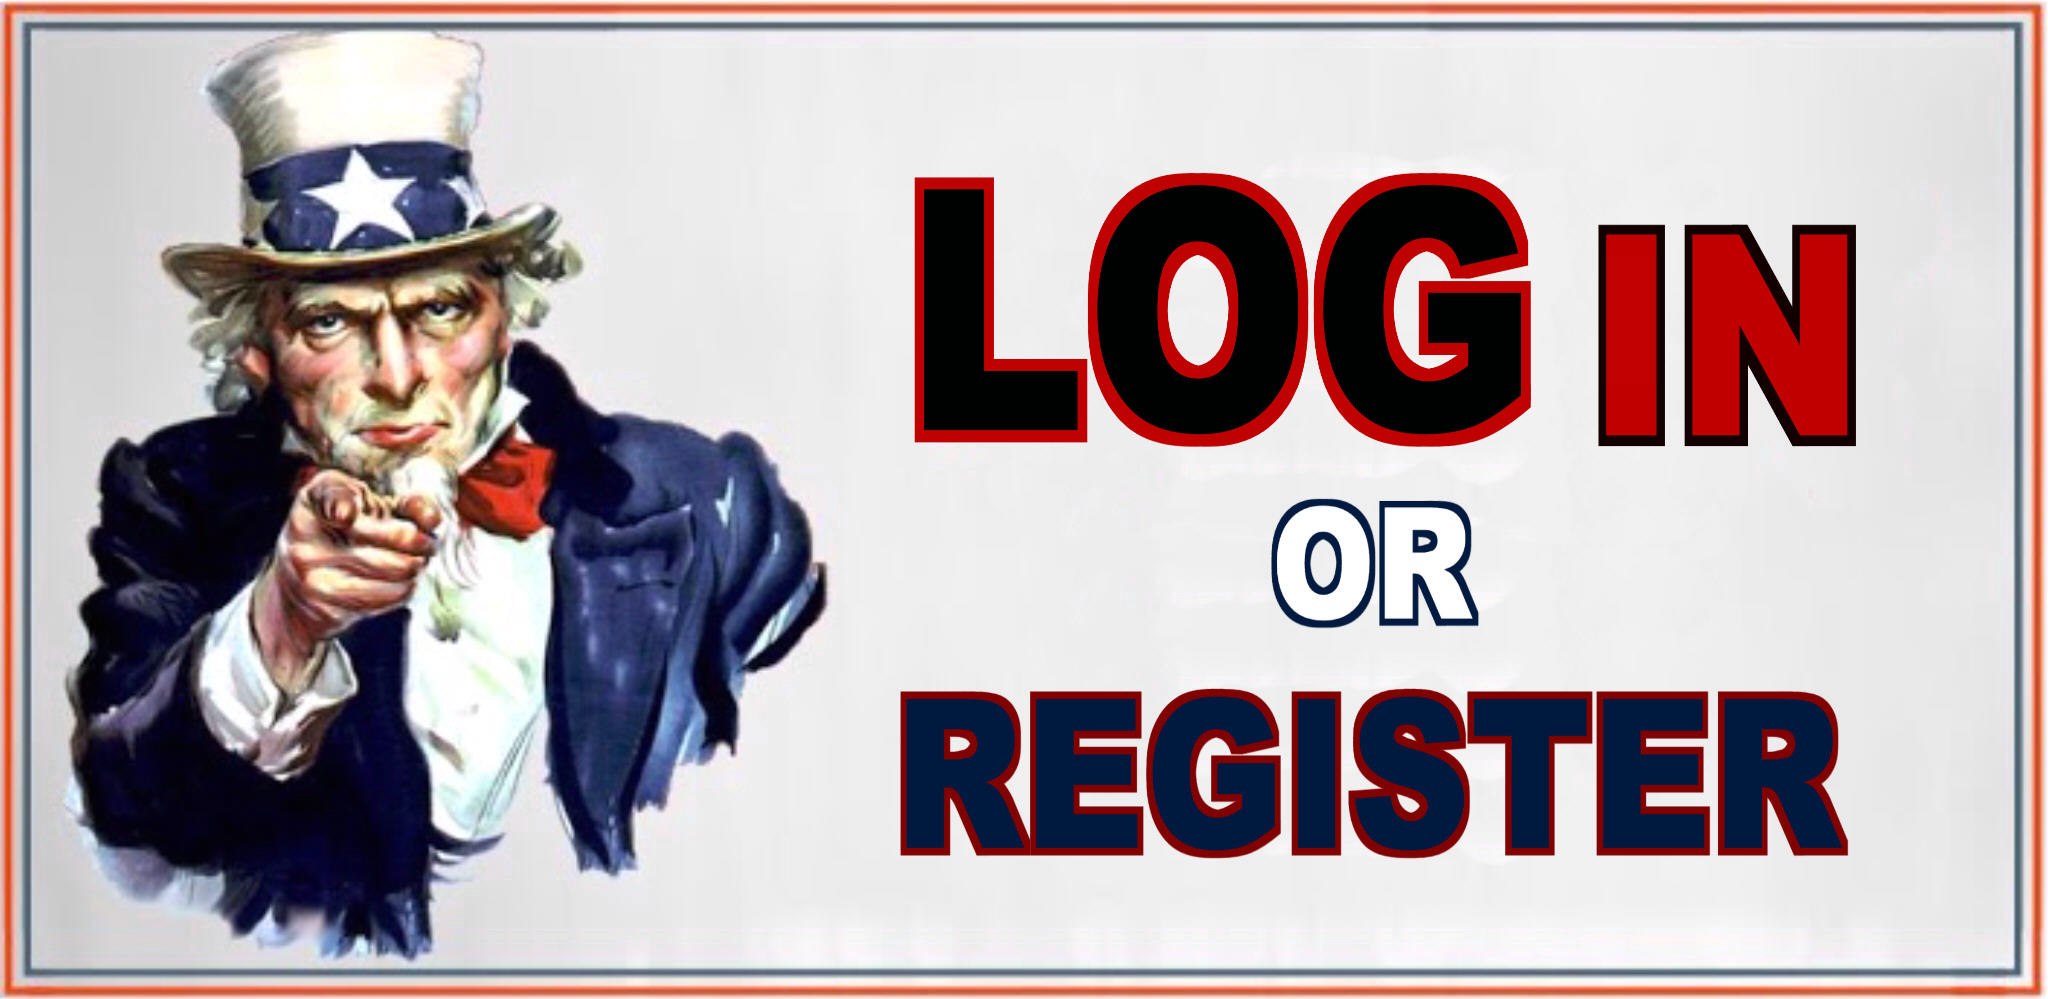 login register